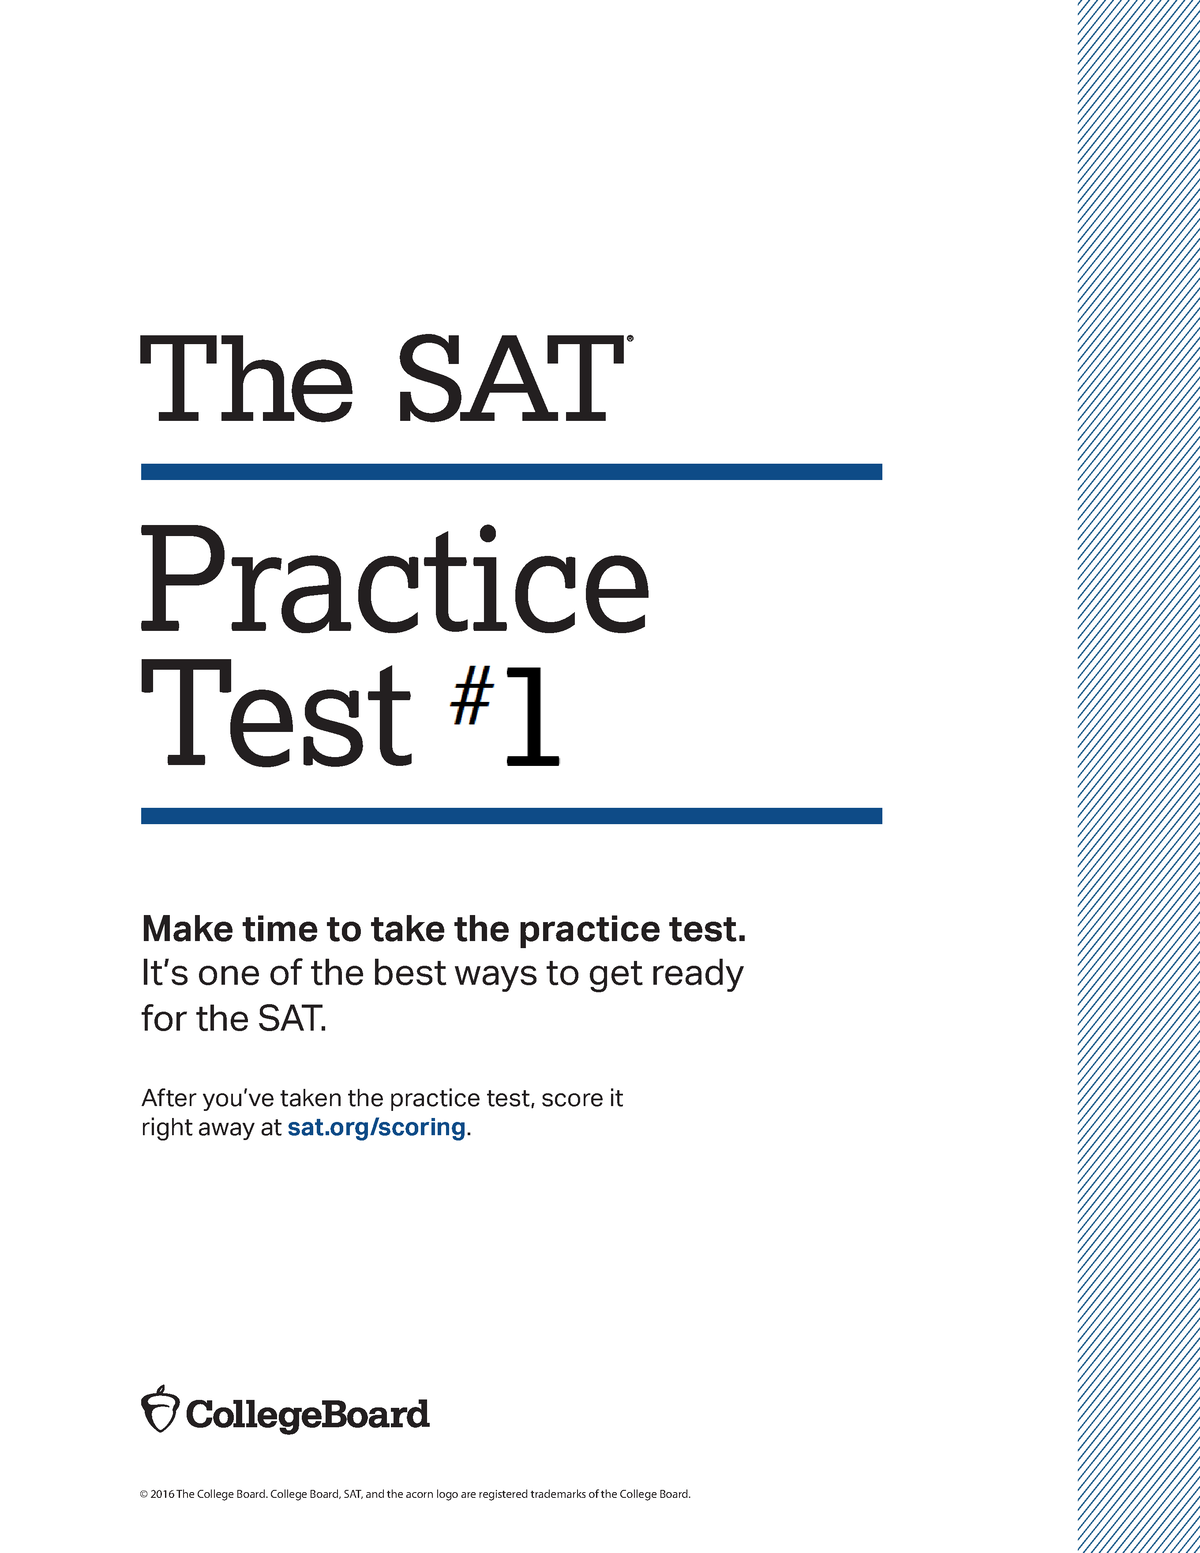 sat-practice-test-1-sadasd-practice-test-2016-the-college-board